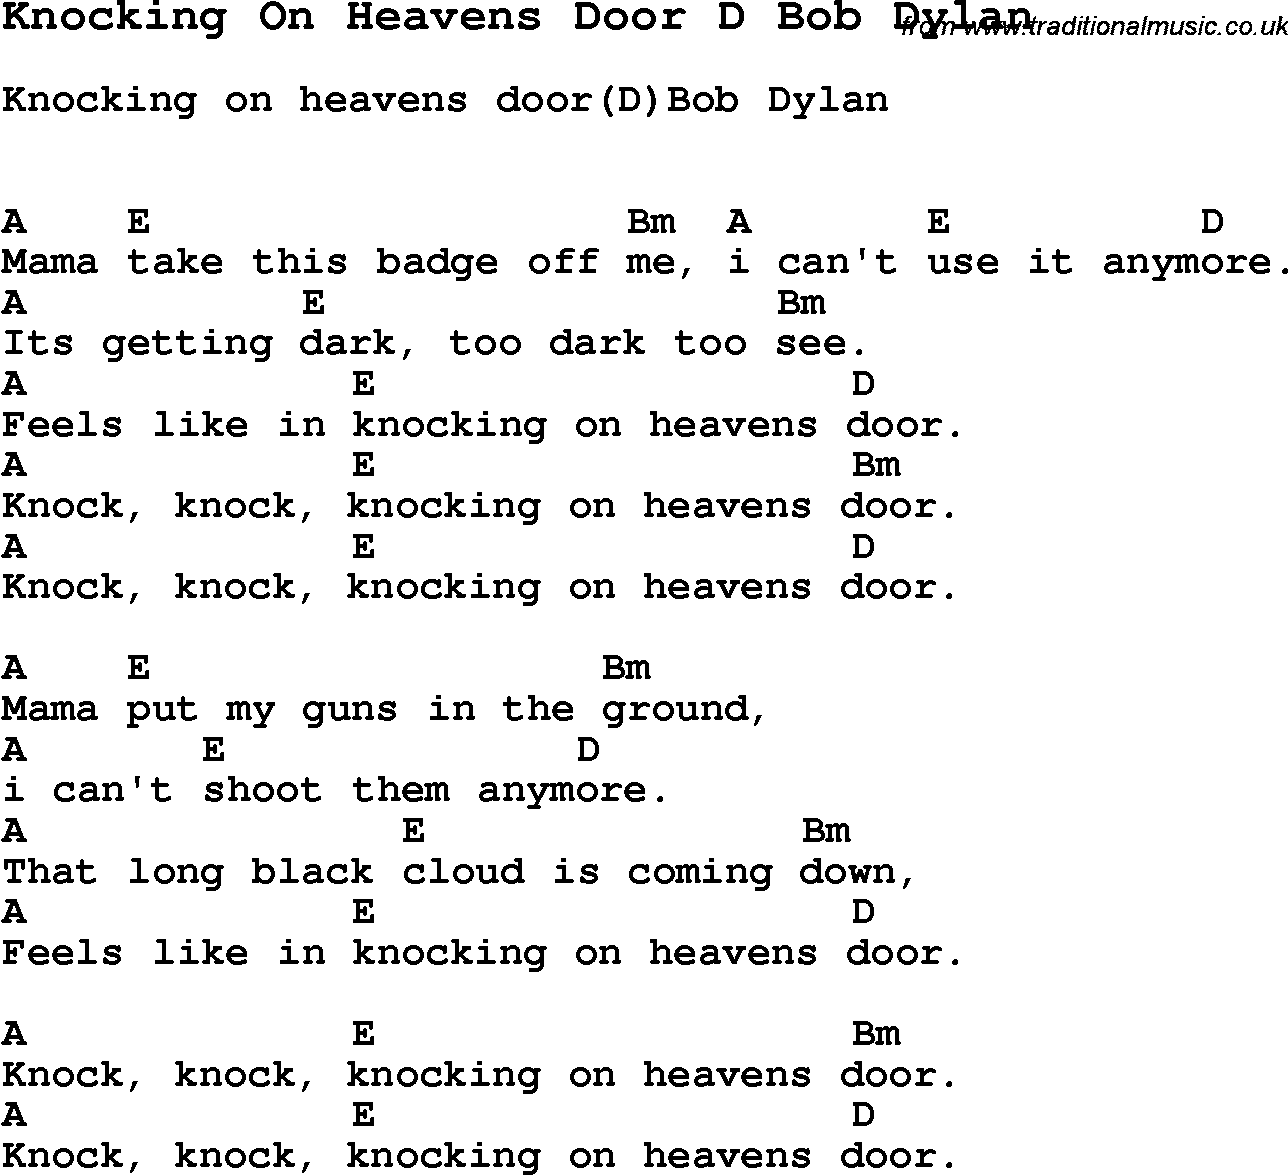 Song Knocking On Heavens Door D Bob Dylan, with lyrics for vocal performance and accompaniment chords for Ukulele, Guitar Banjo etc.